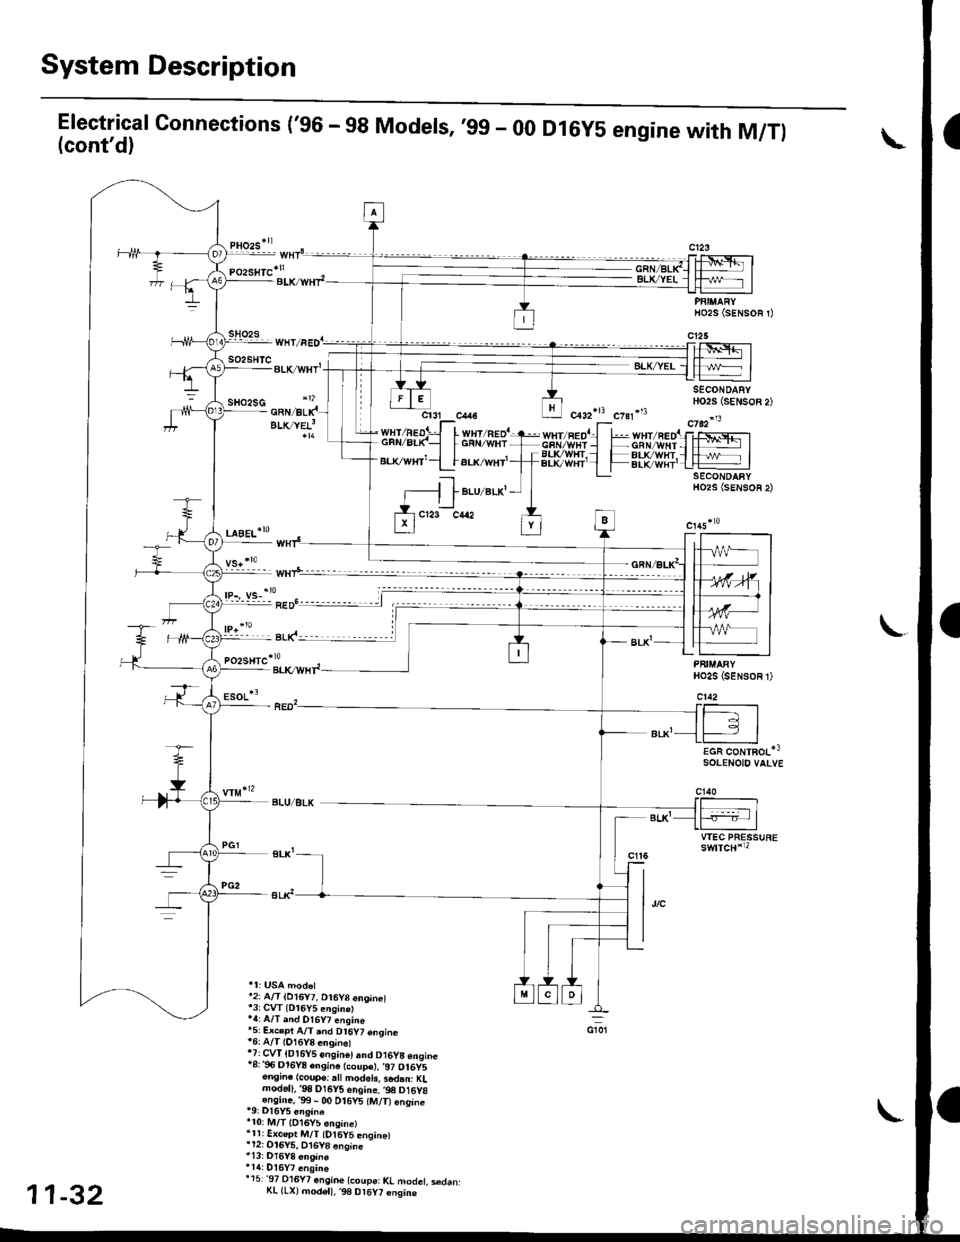 HONDA CIVIC 1997 6.G Owners Guide System Description
Electrical Connections (96 - 98 Models, ,99 - 00 Dl6y5 engine with M/T)(contd)
ptozs"
pozslttc*rr
WHT,REDl
s02sHTc-BLK/WHT
aLKlyeL!
LraeL*ro
pozsntc*lu
:soL*3
BLU/ALK
12: A/T (